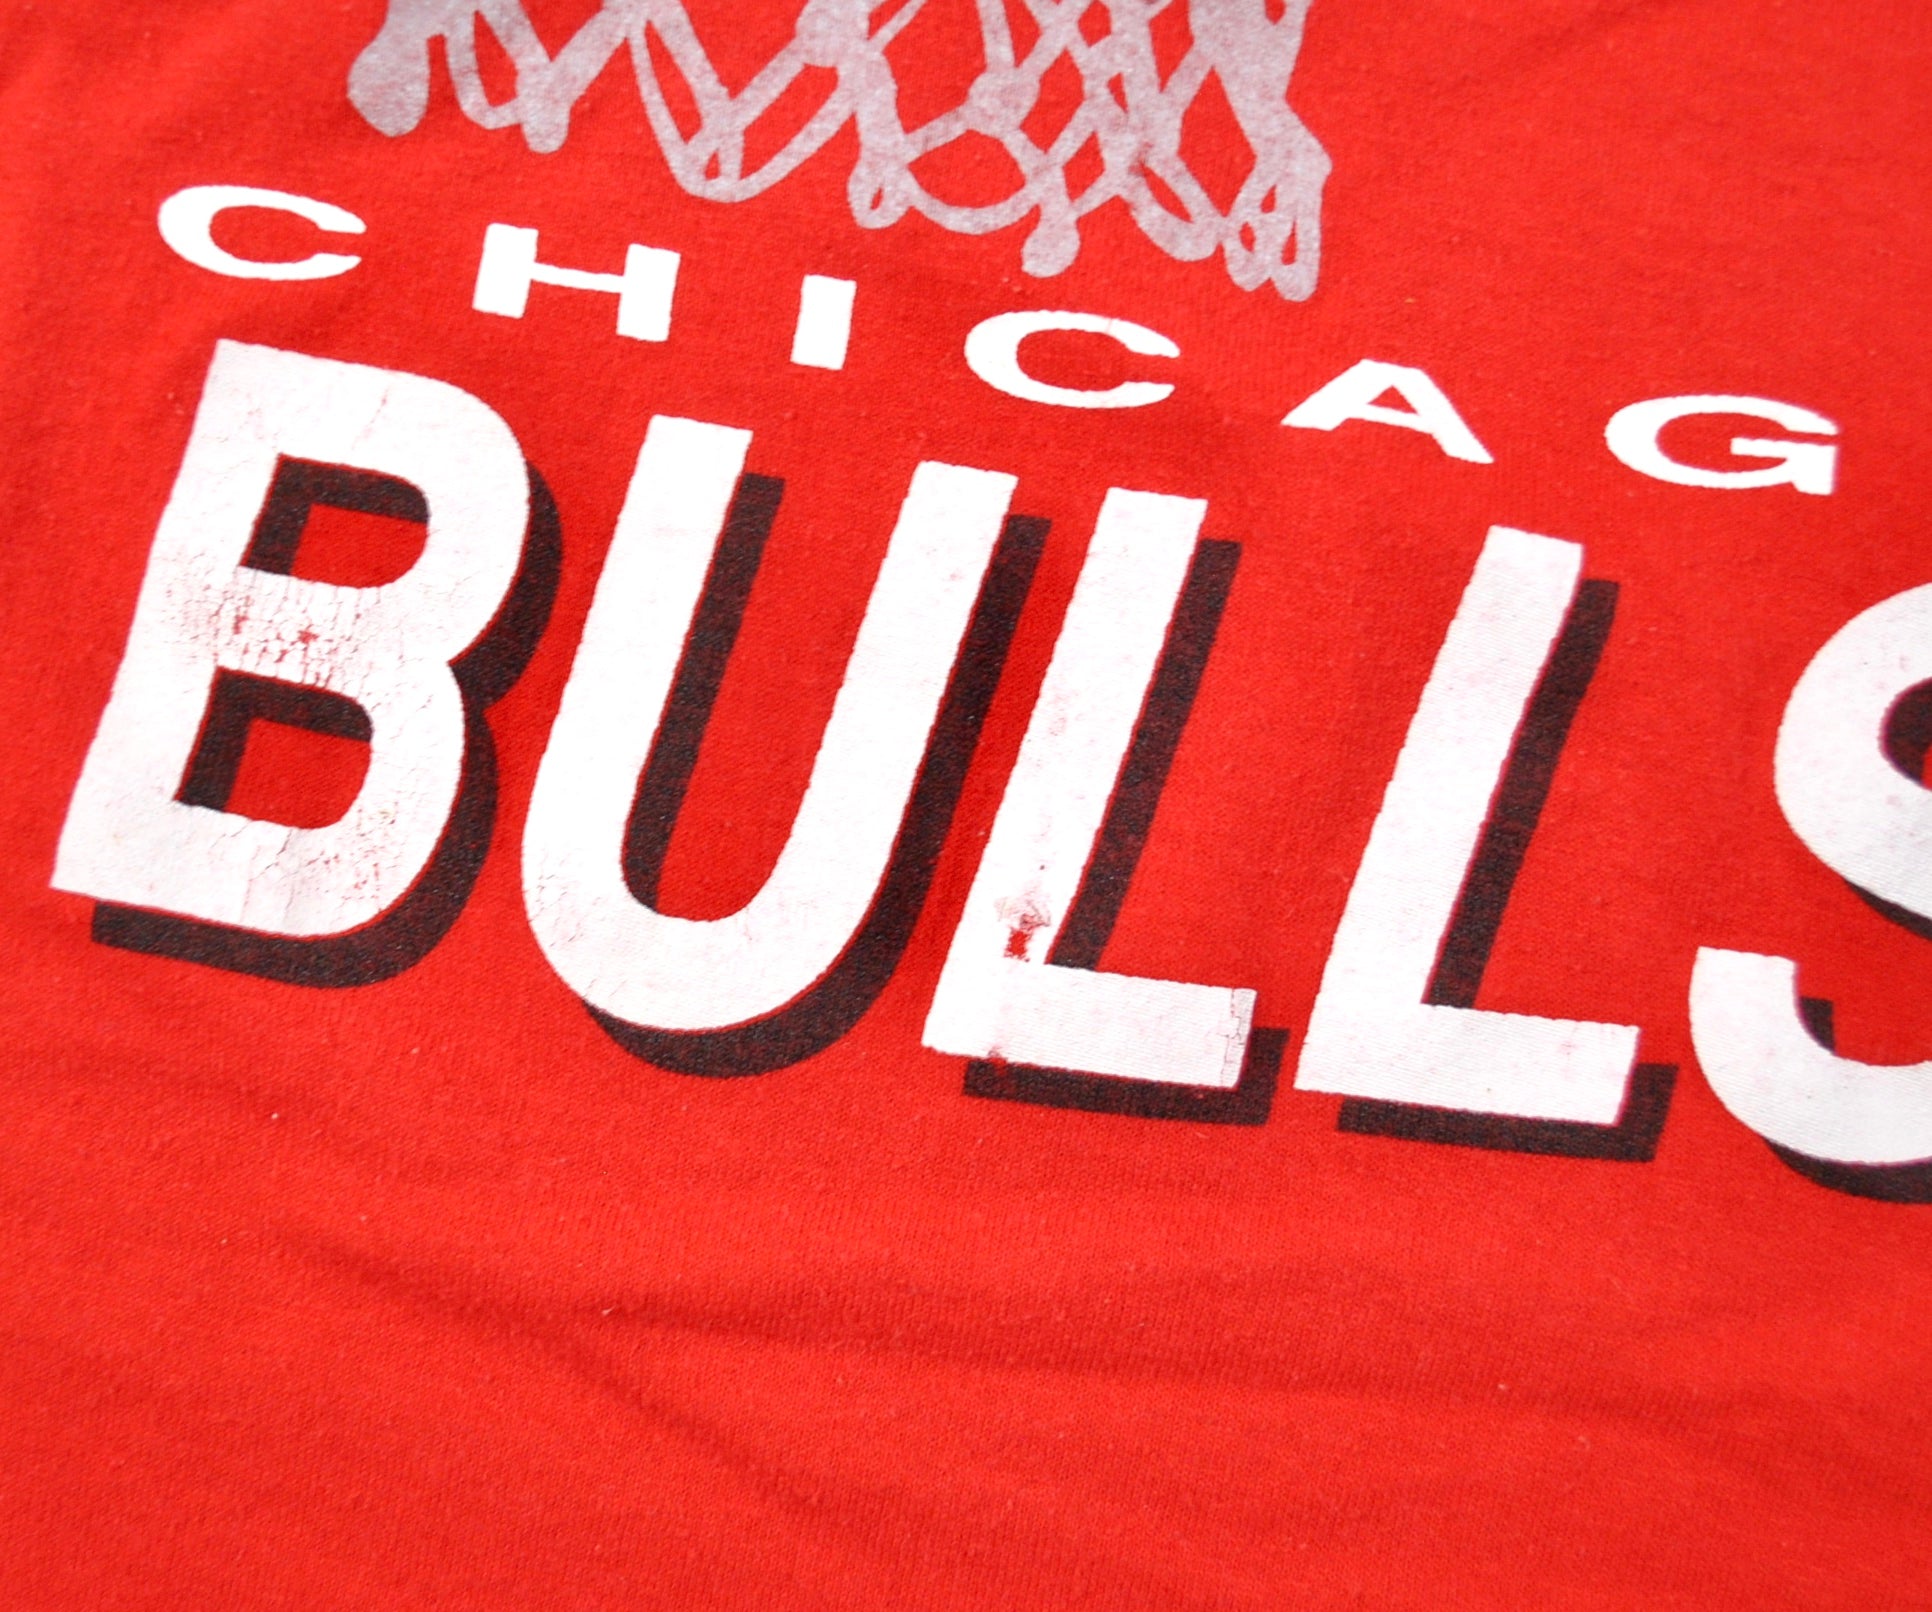 Michael Jordan Shirt Basketball Chicago Bulls Championship 1991 NBA Finals  Tee